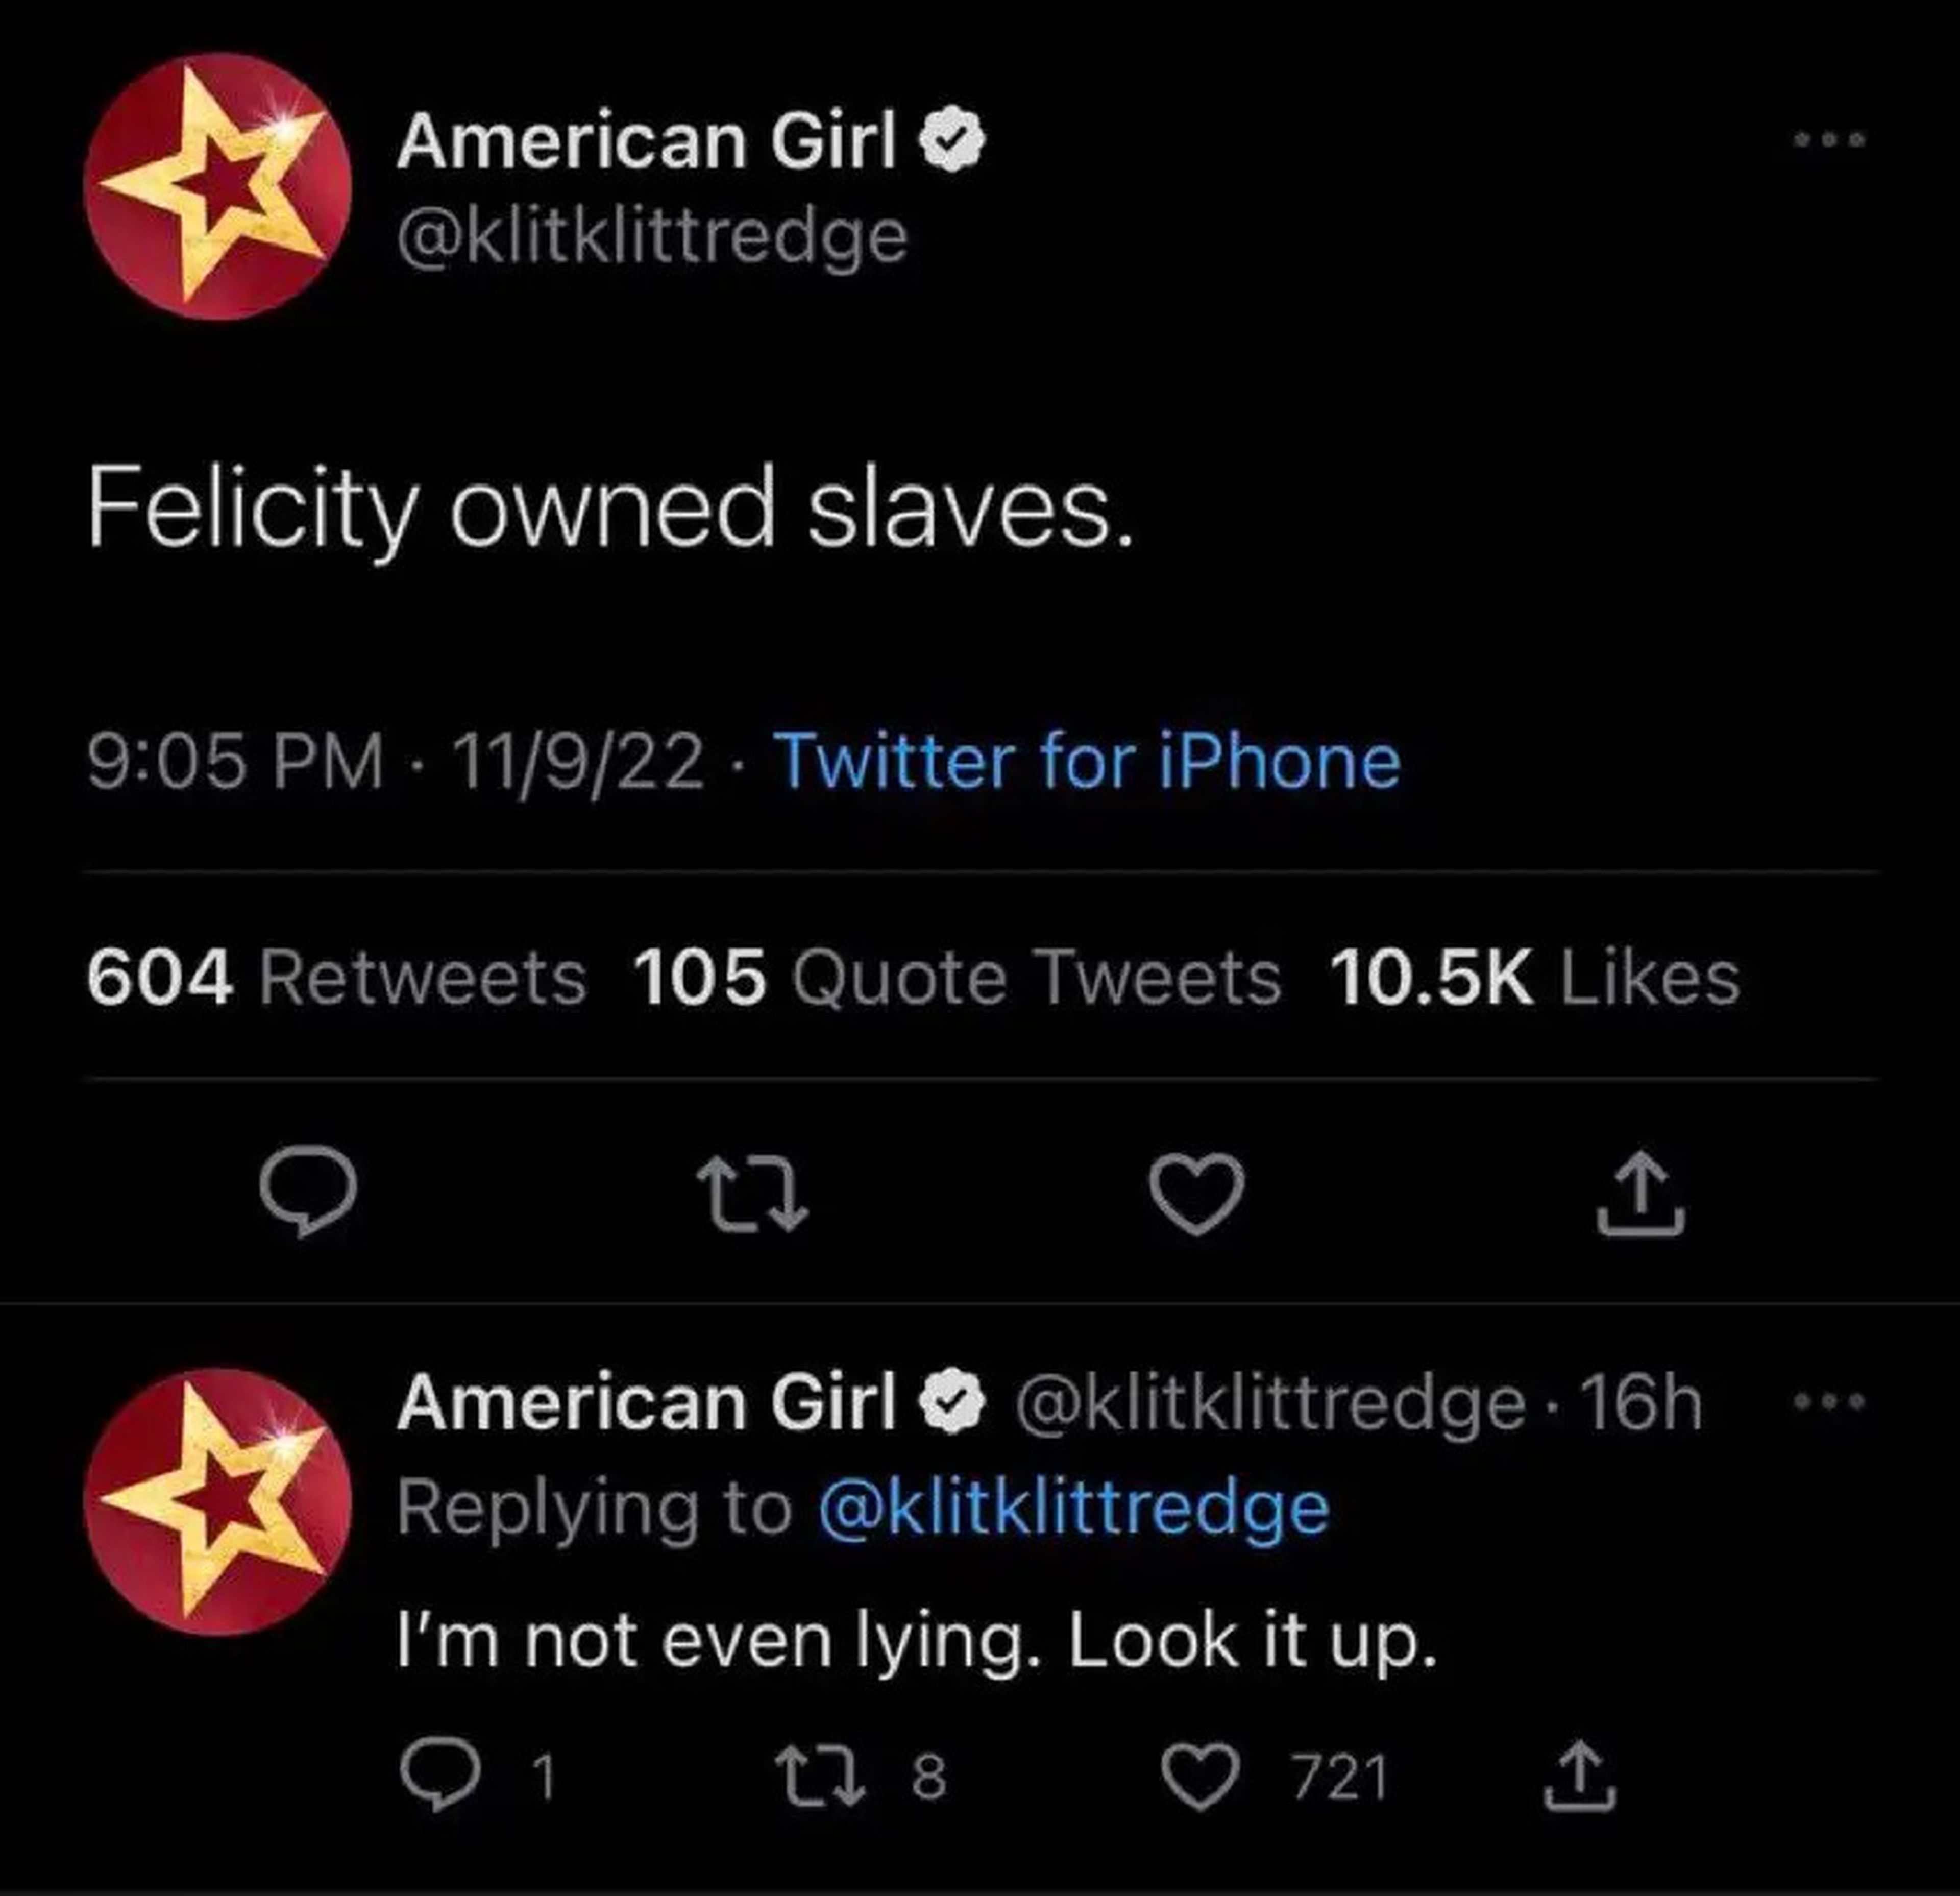 Tweet impersonating toy brand American Girl.